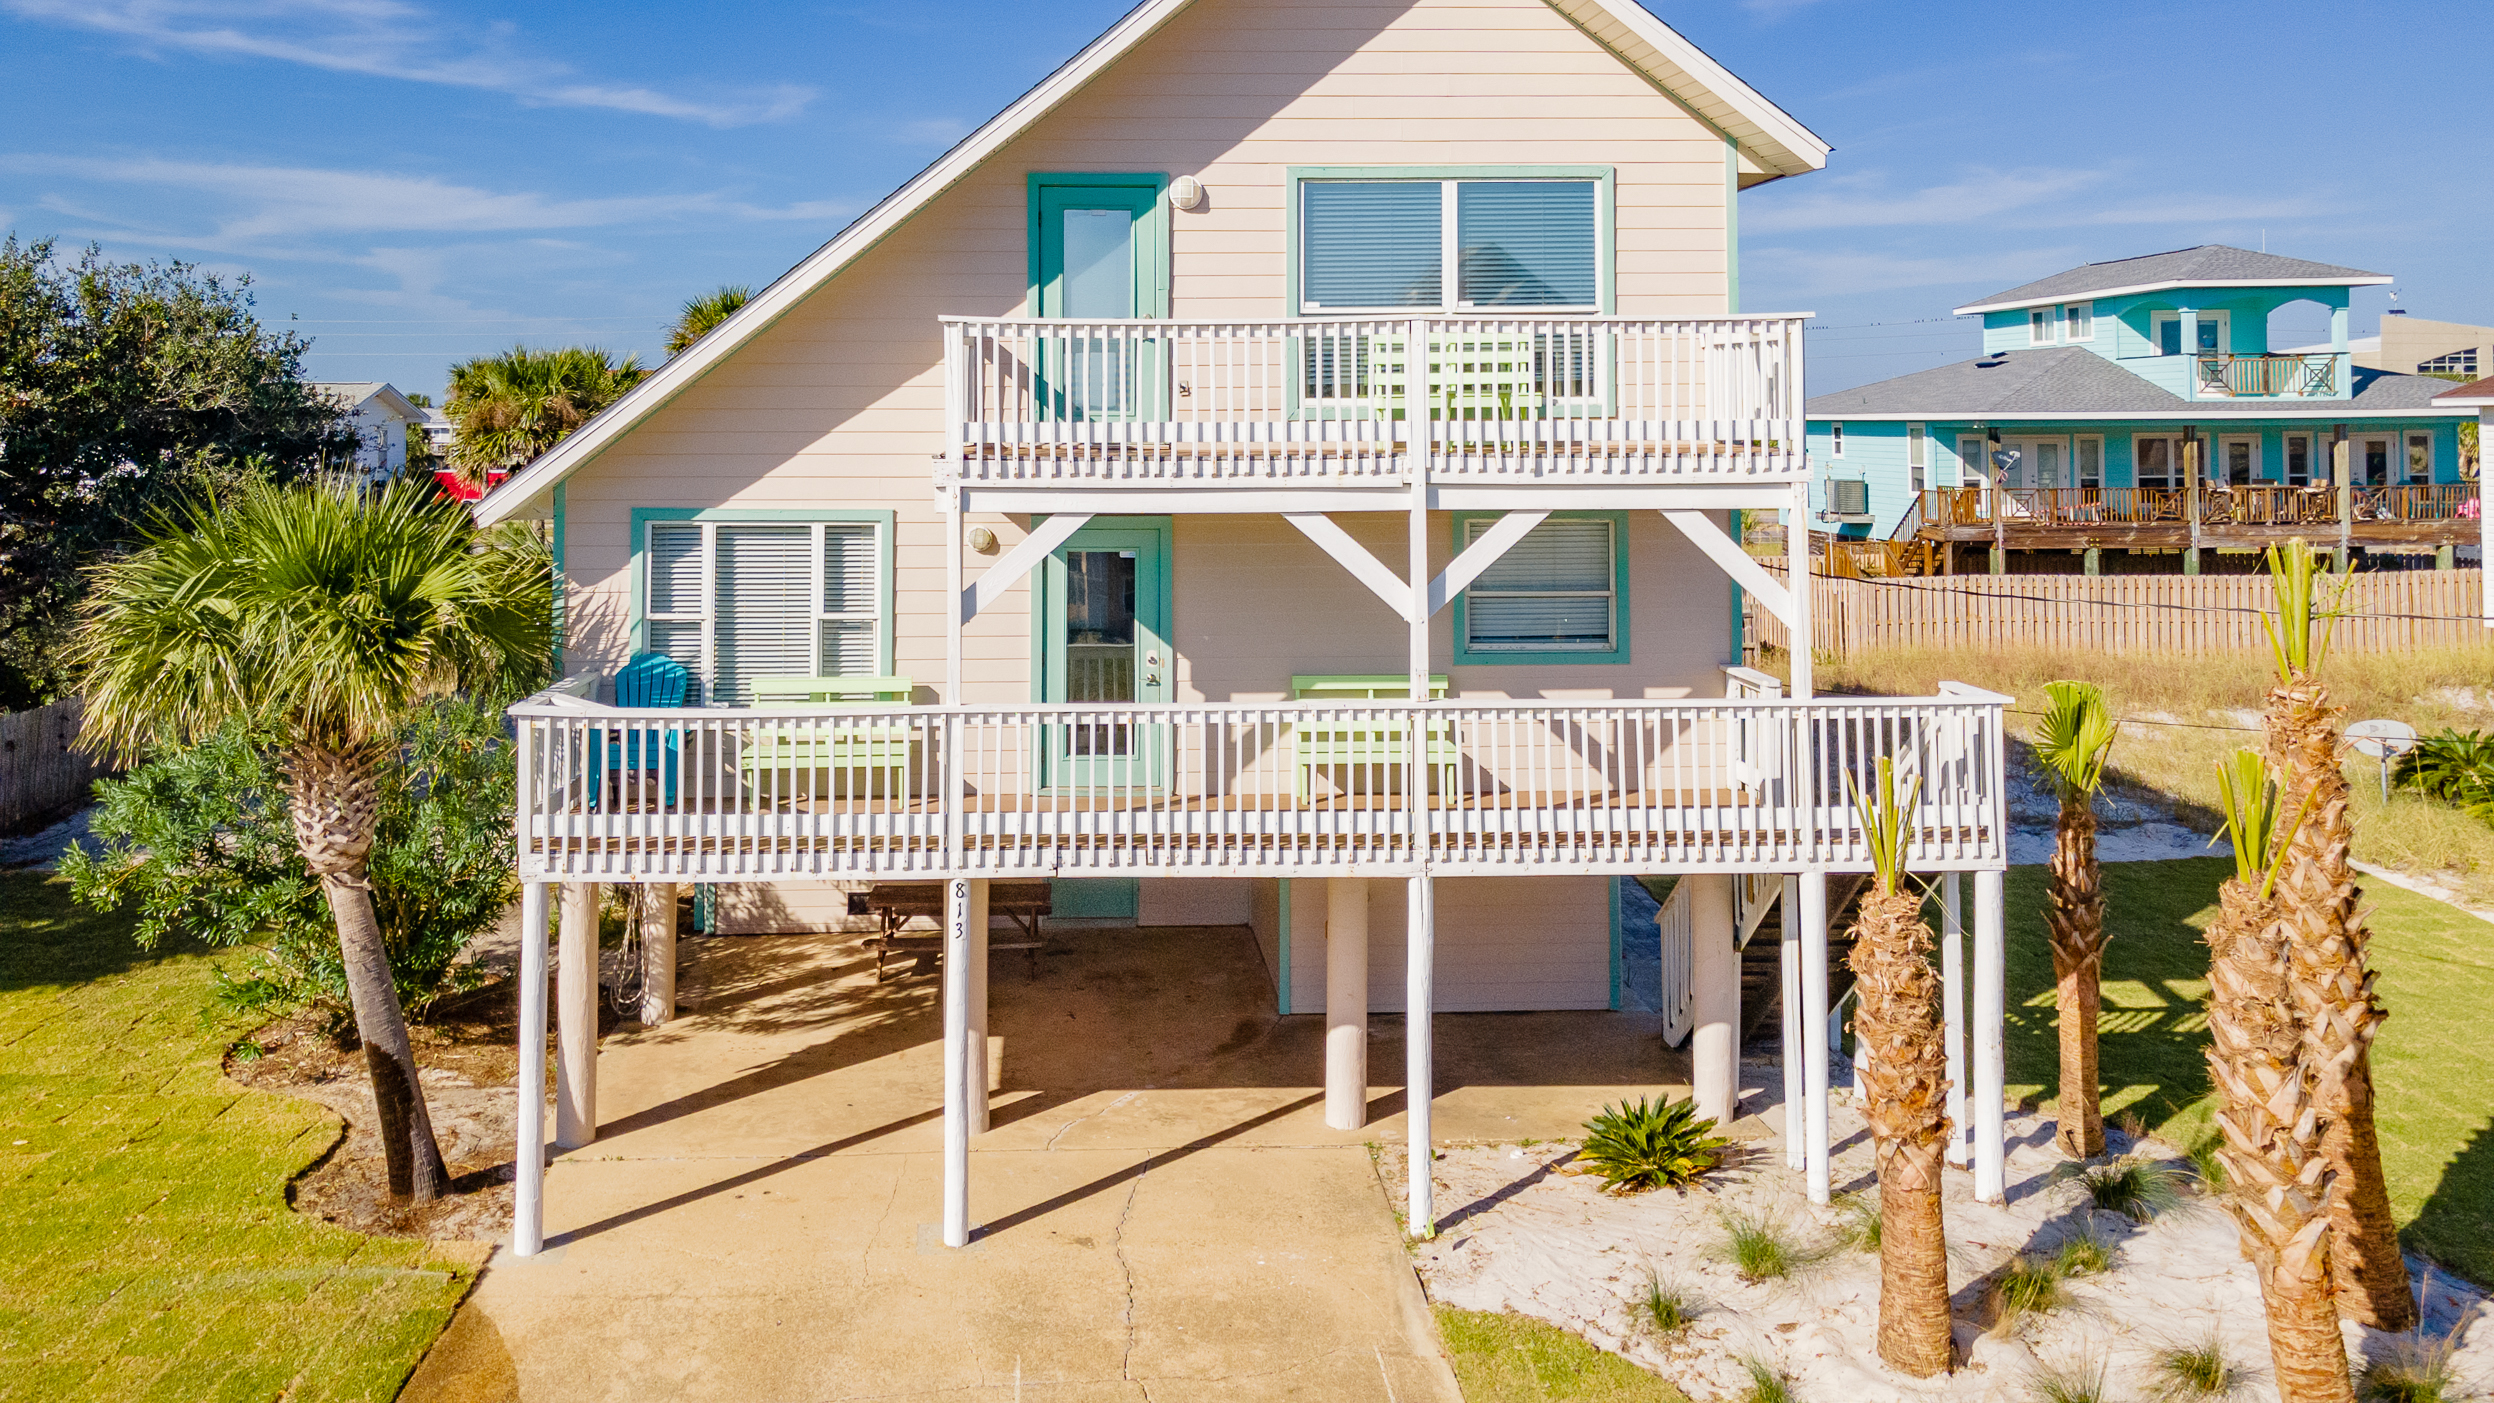 Maldonado 813 - The Lazee Lagoon Beach House House / Cottage rental in Pensacola Beach House Rentals in Pensacola Beach Florida - #2